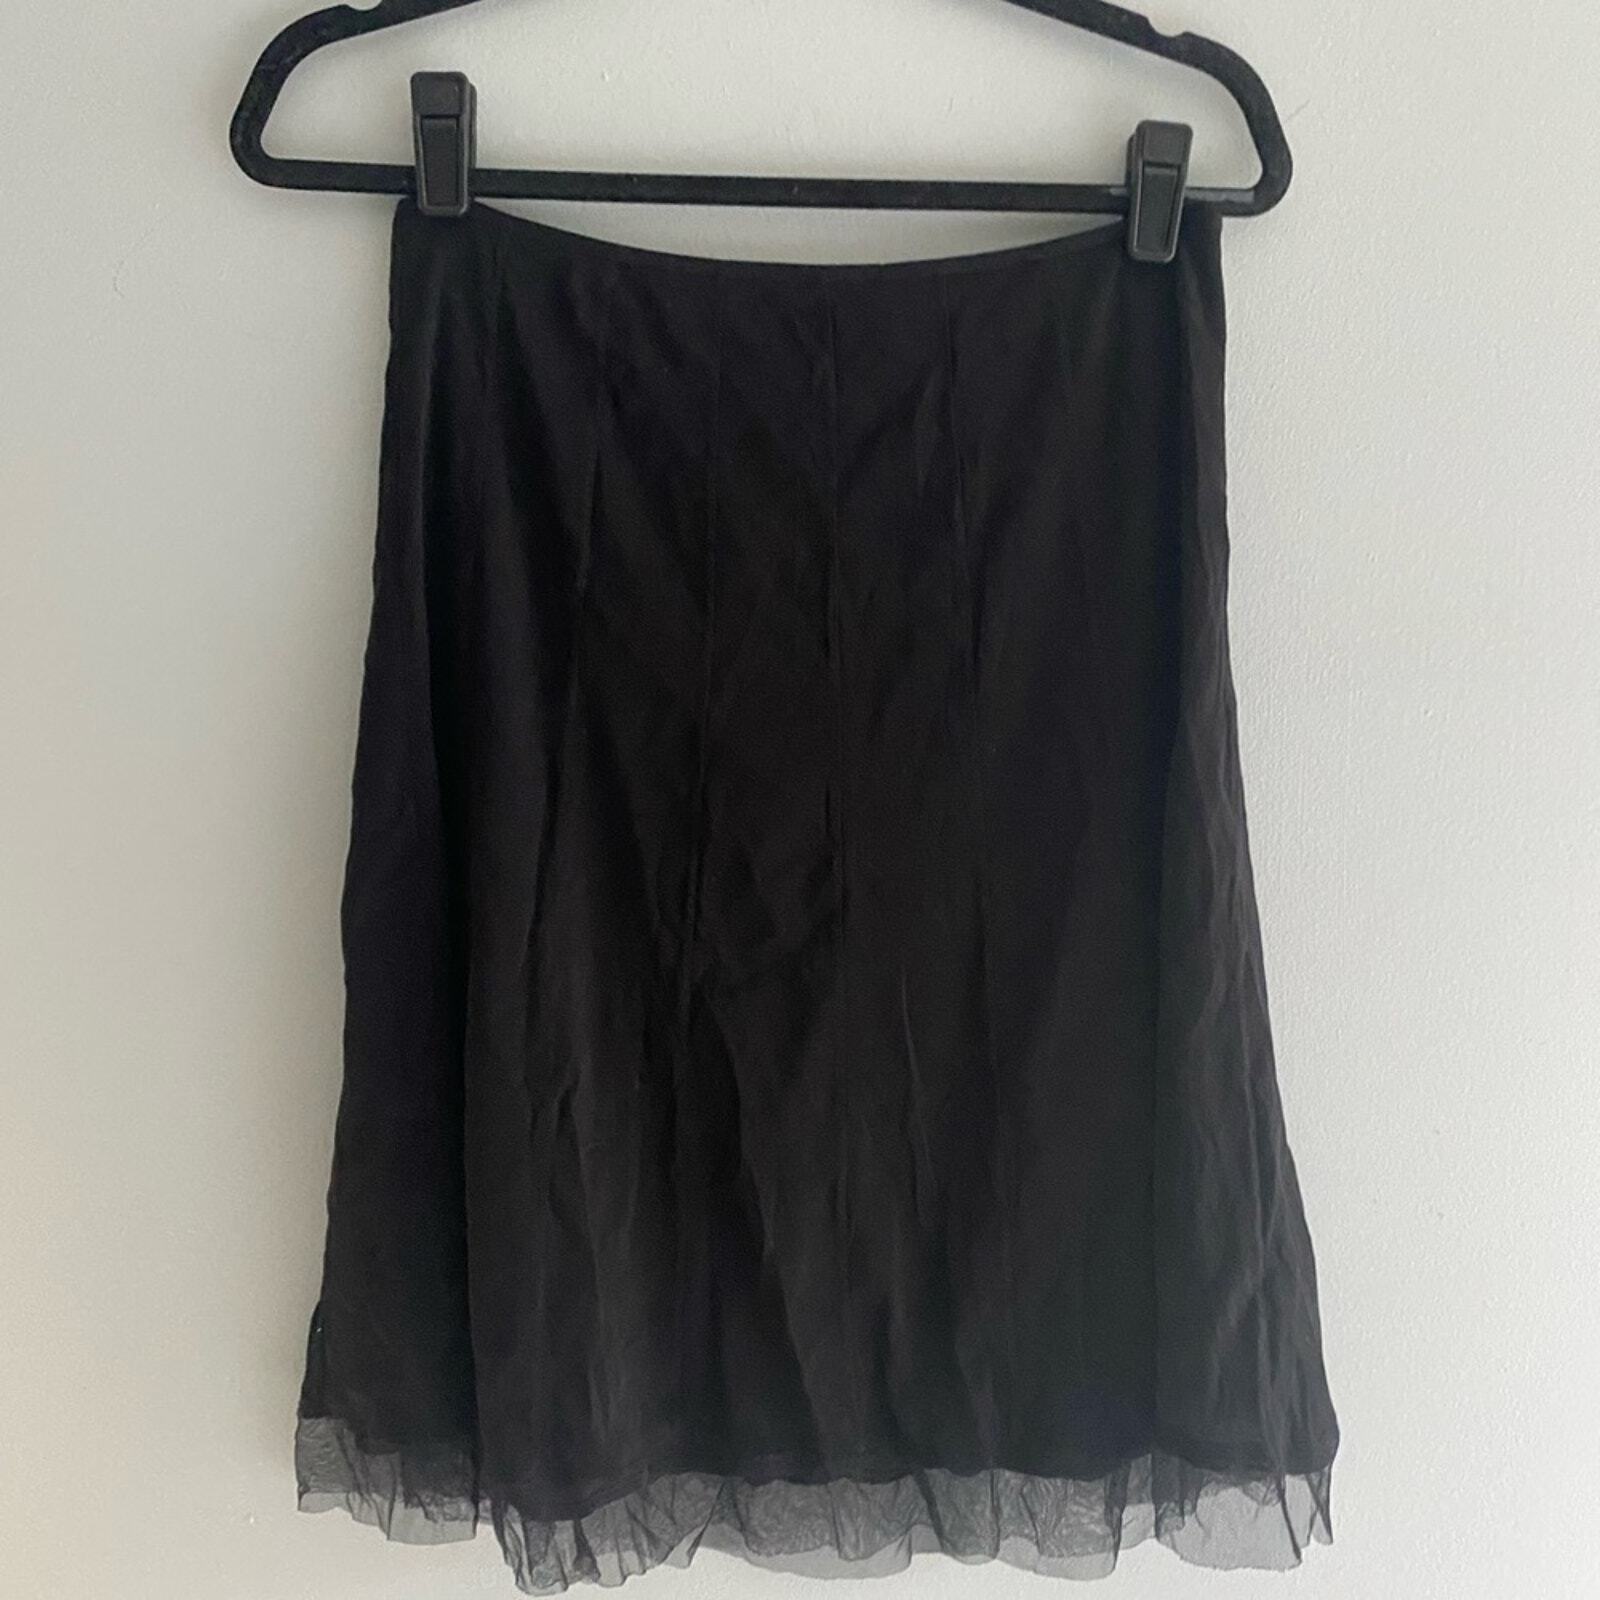 Vivienne Tam Mesh Black Skirt Size 2